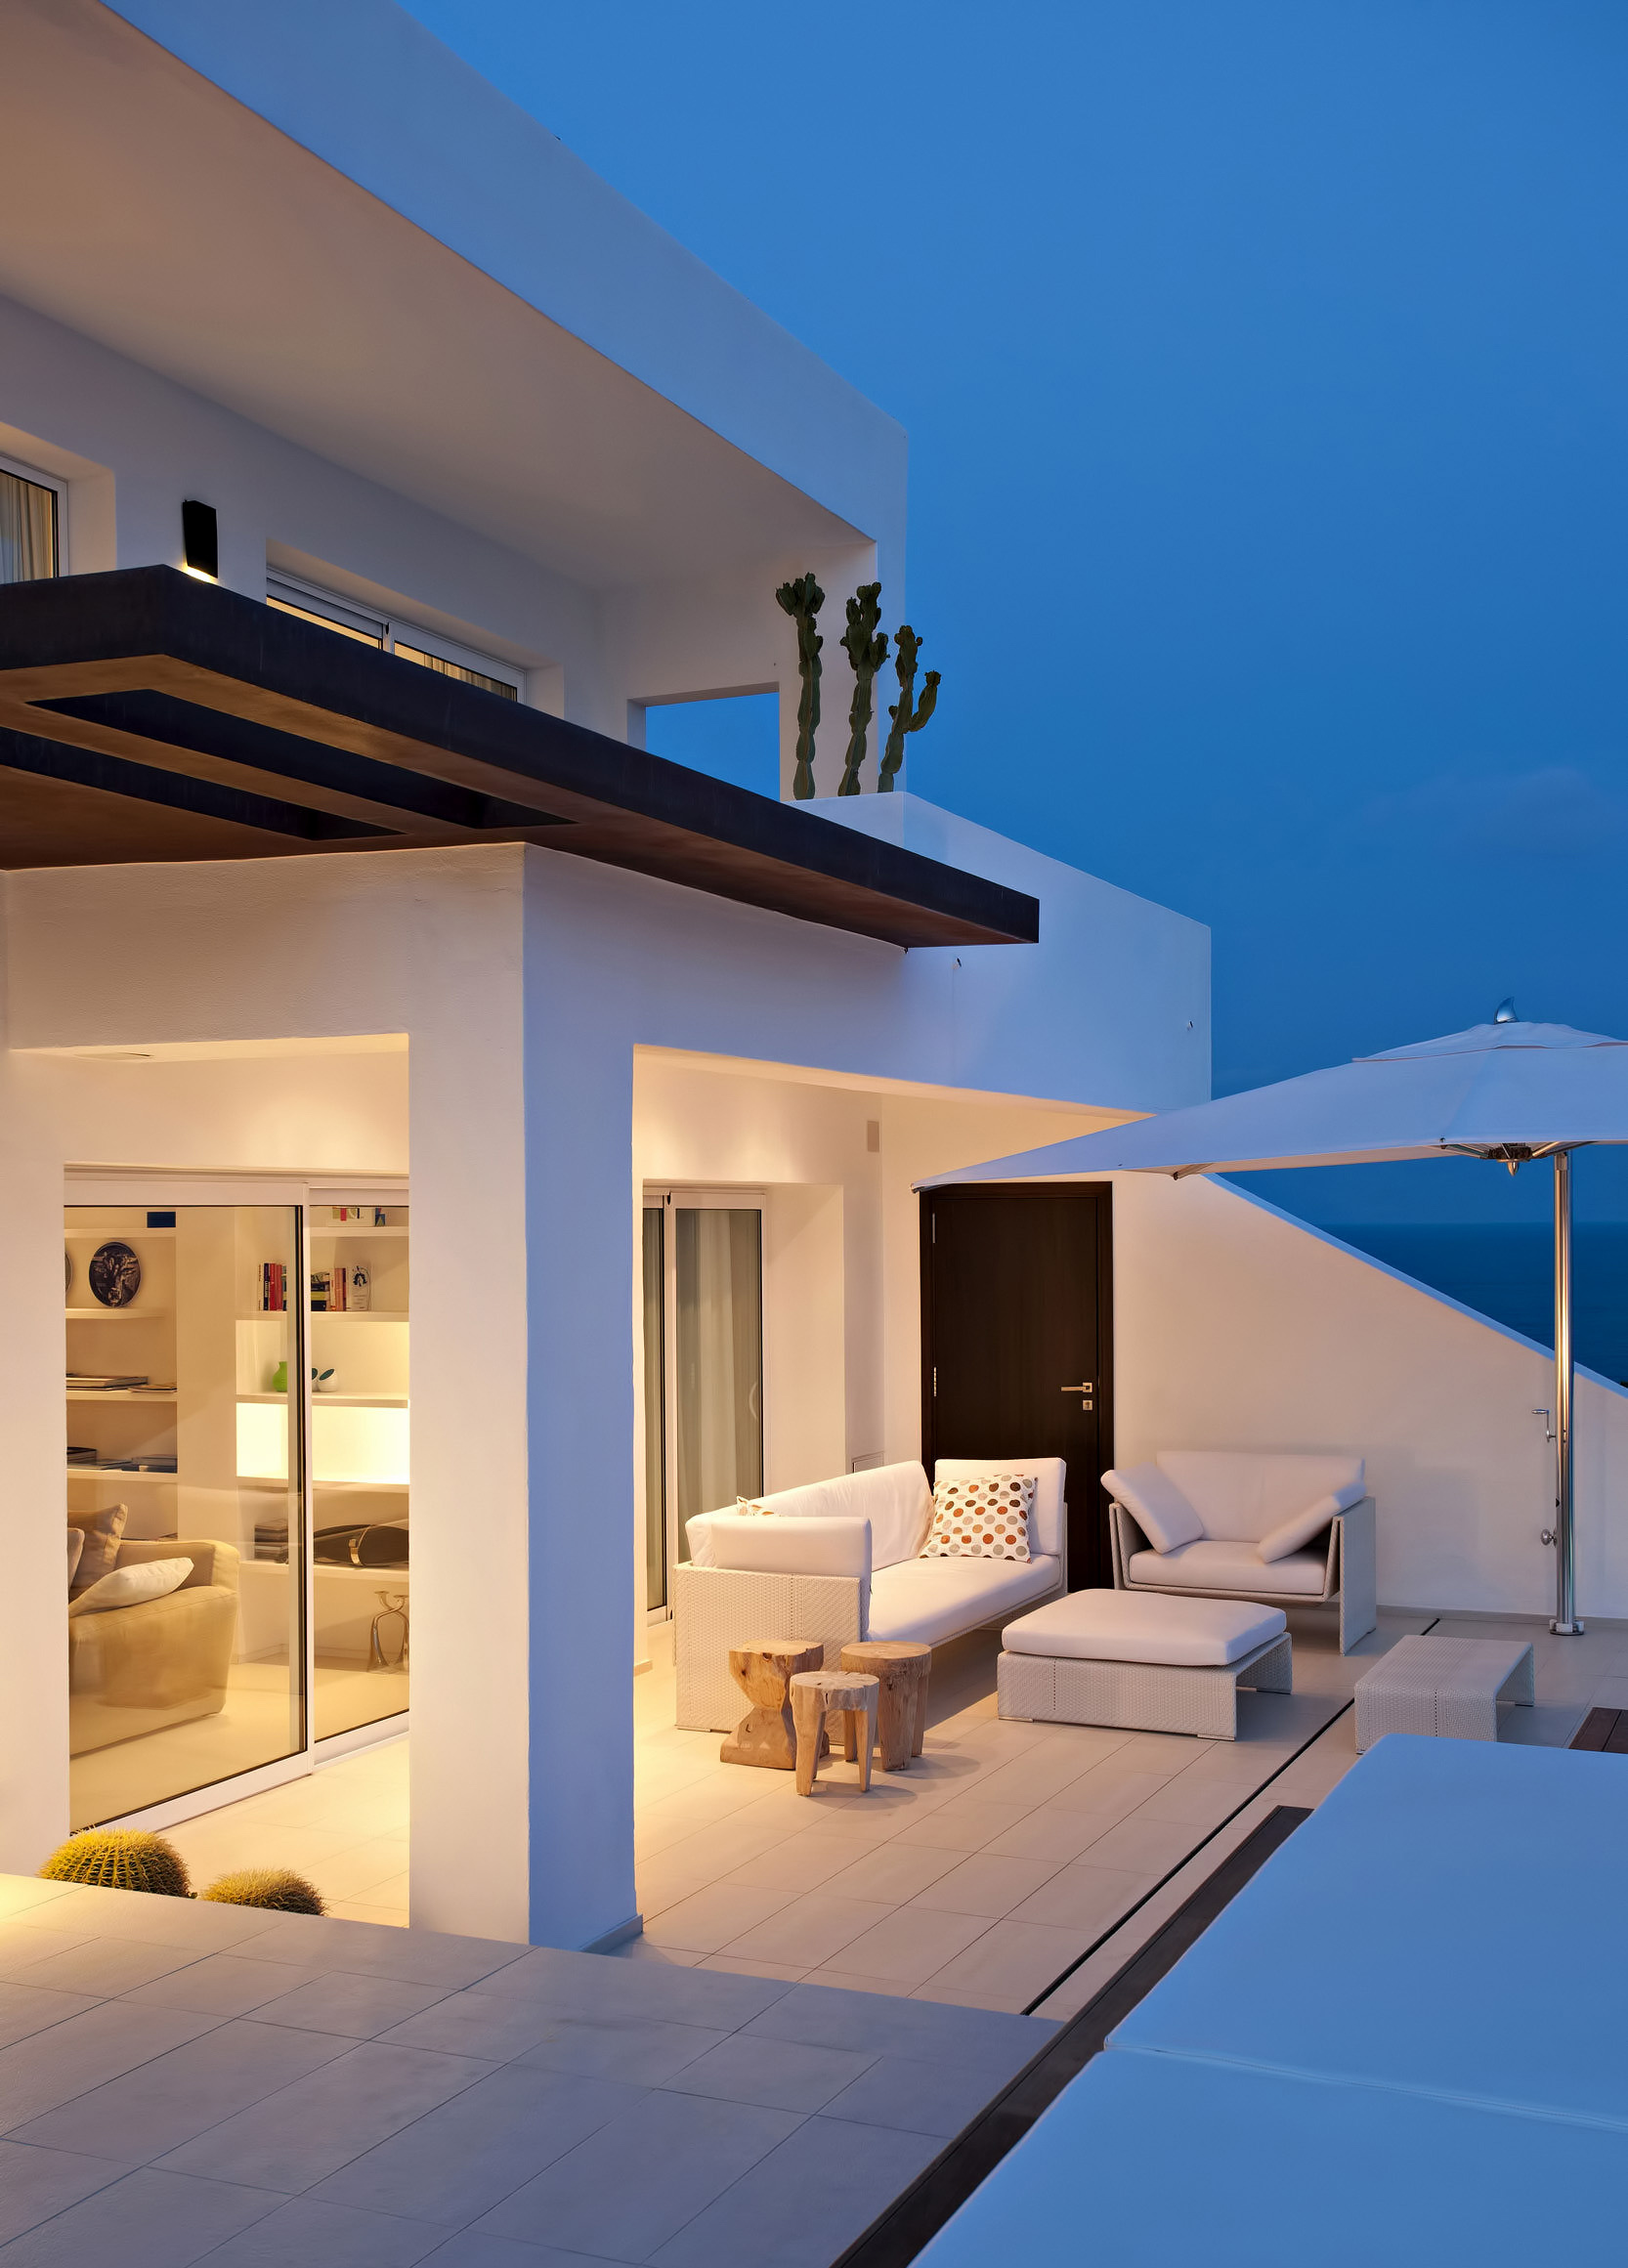 Dupli Dos Luxury Residence - Roca Llisa, Ibiza, Spain